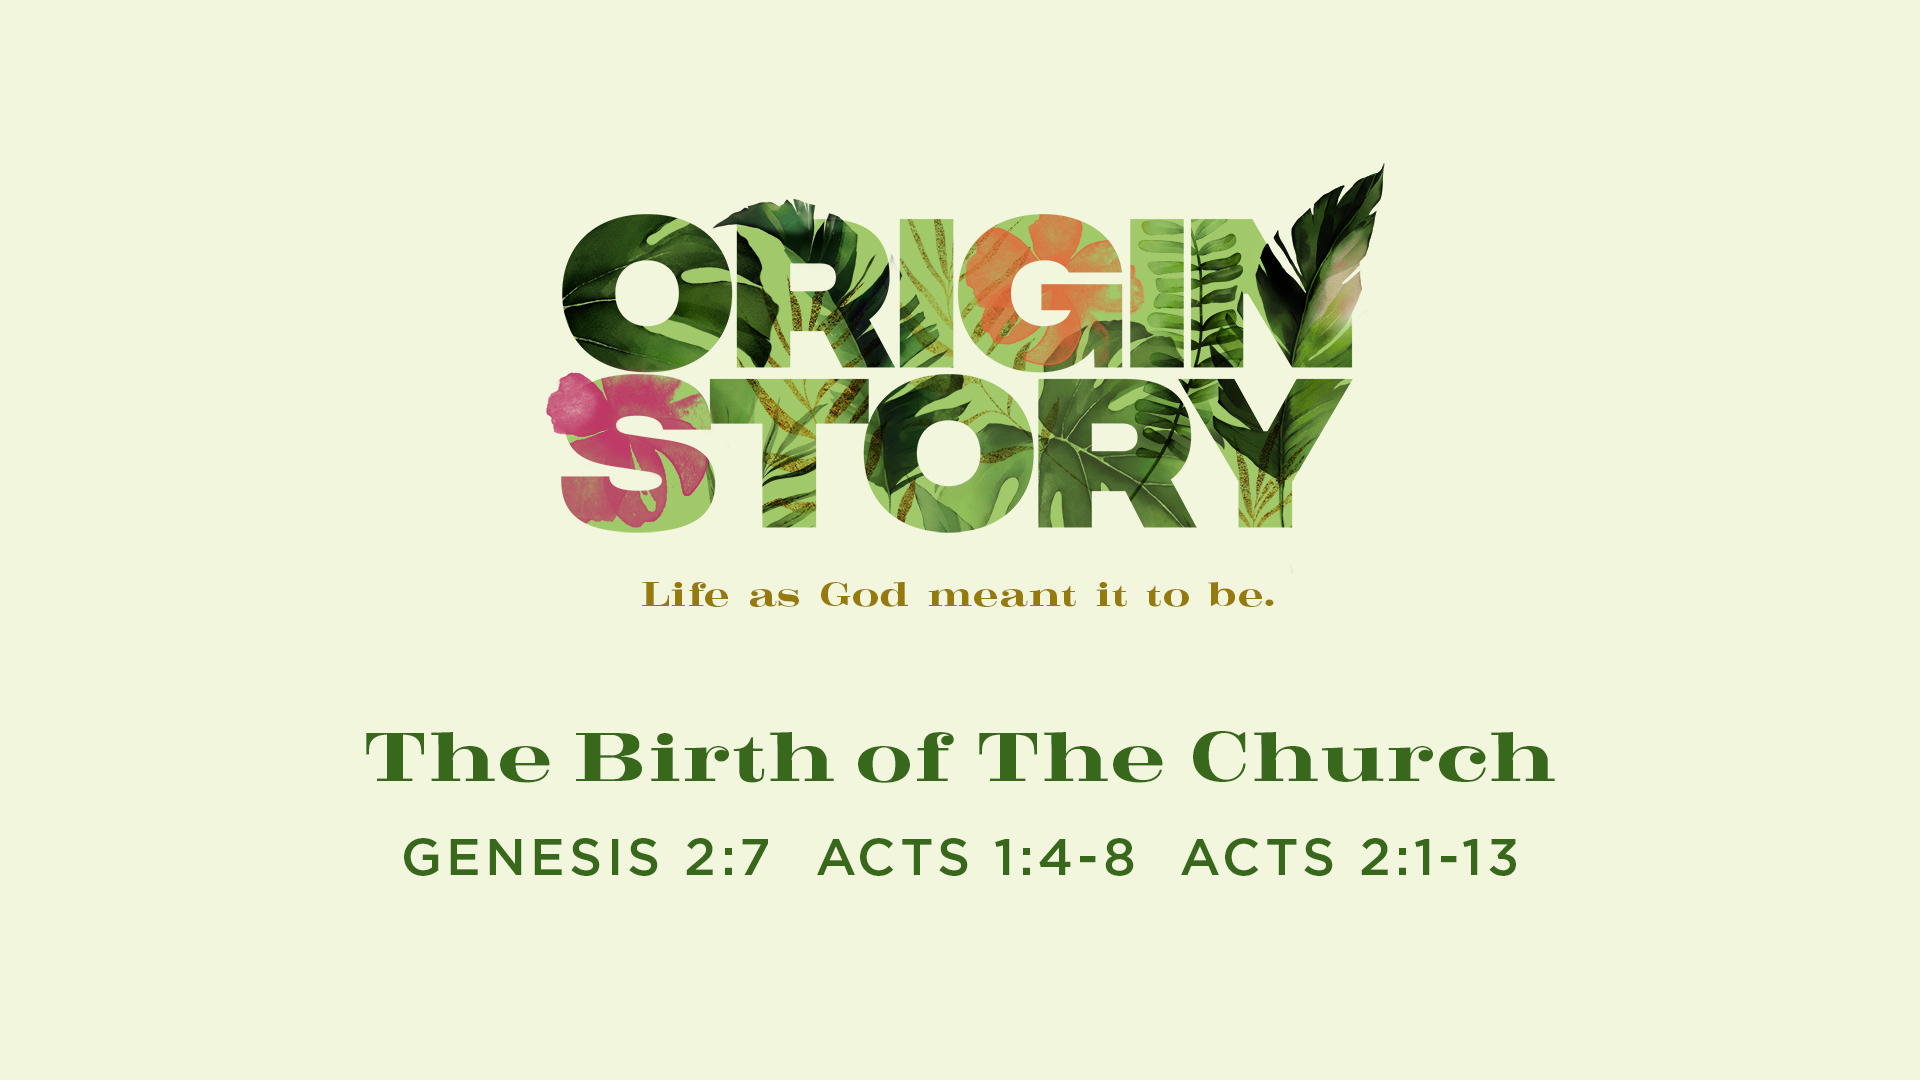 Origin Story: The Birth of the Church